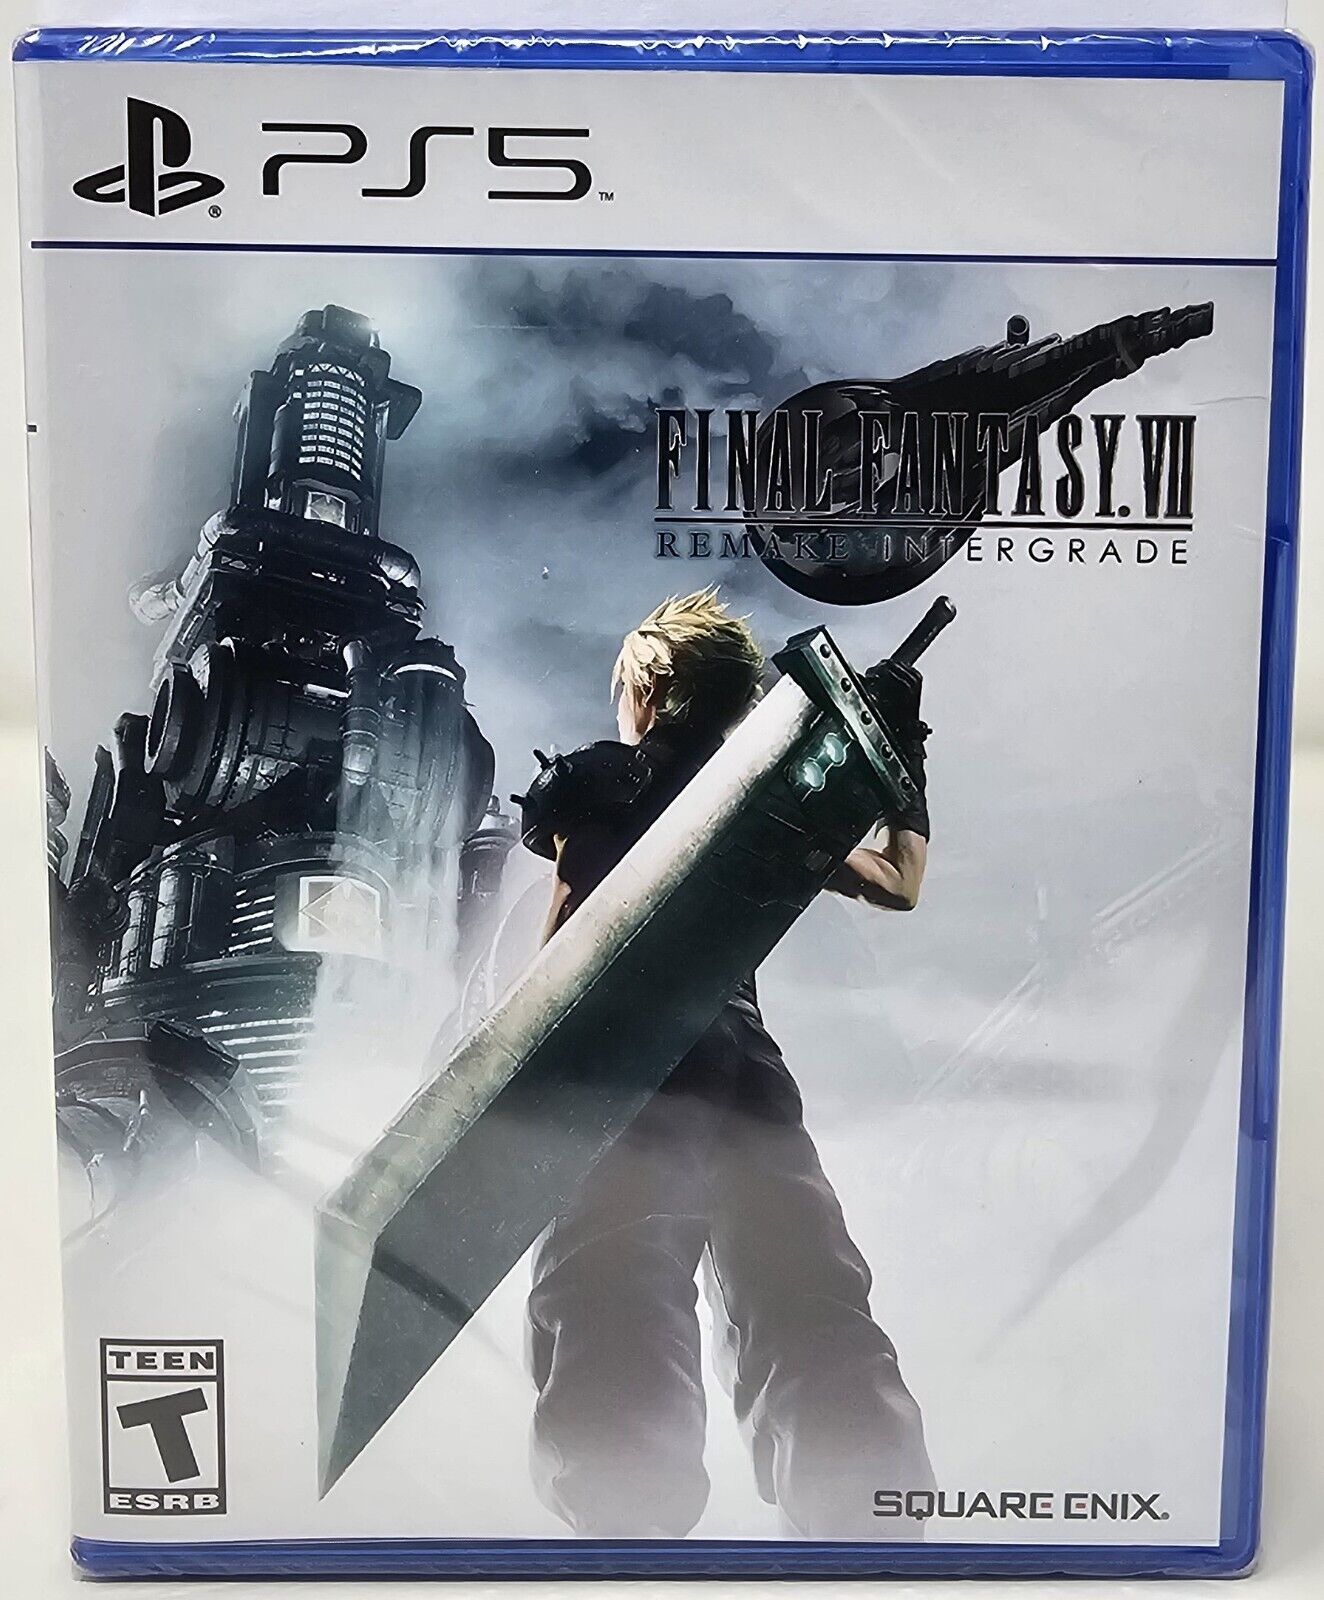 Final Fantasy VII 7 Remake Intergrade PS5 BRAND NEW! FACTORY SEALED! - N